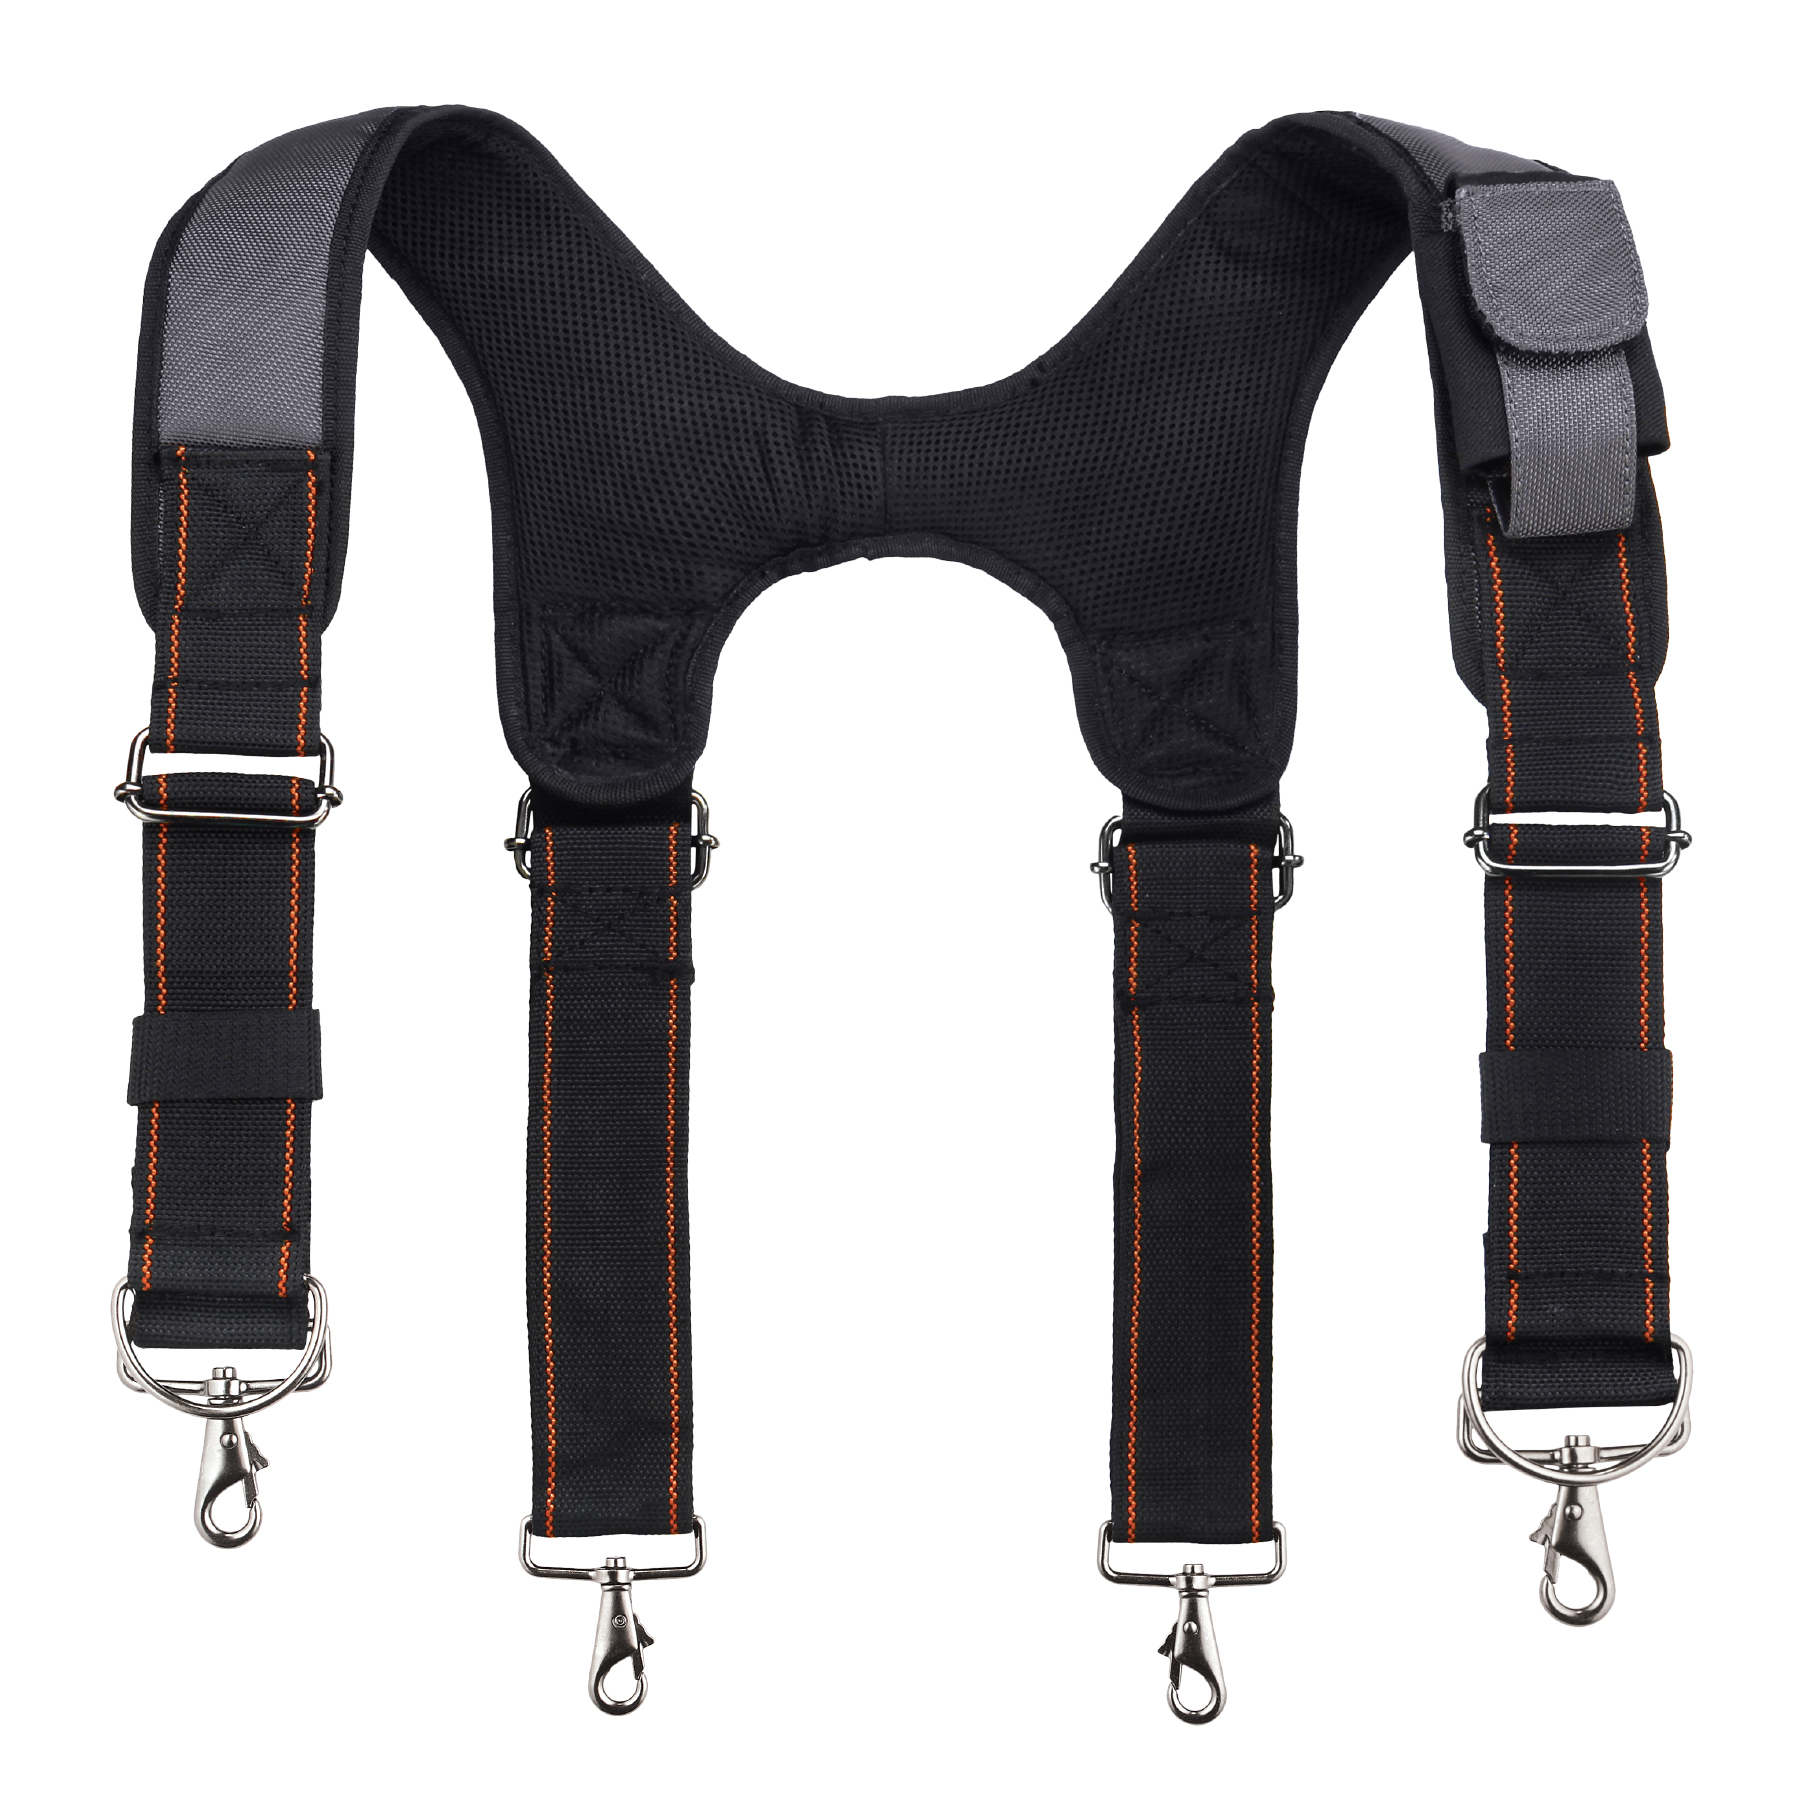 Tool Belt Suspenders with Shoulder Pads | Ergodyne